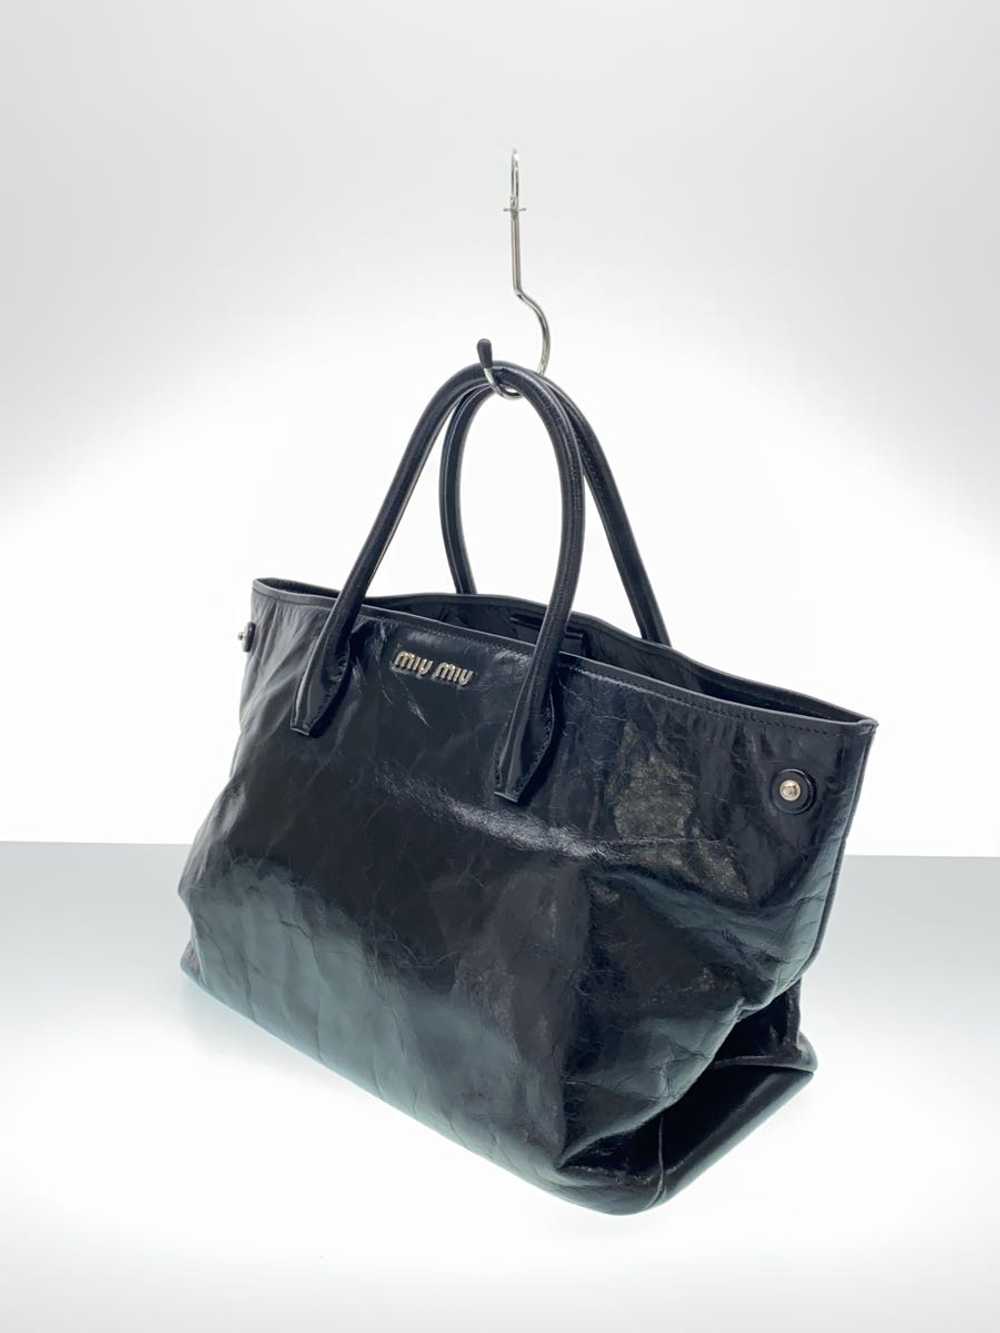 MIUMIU Tote Bag/Leather/Blk Bag - image 2